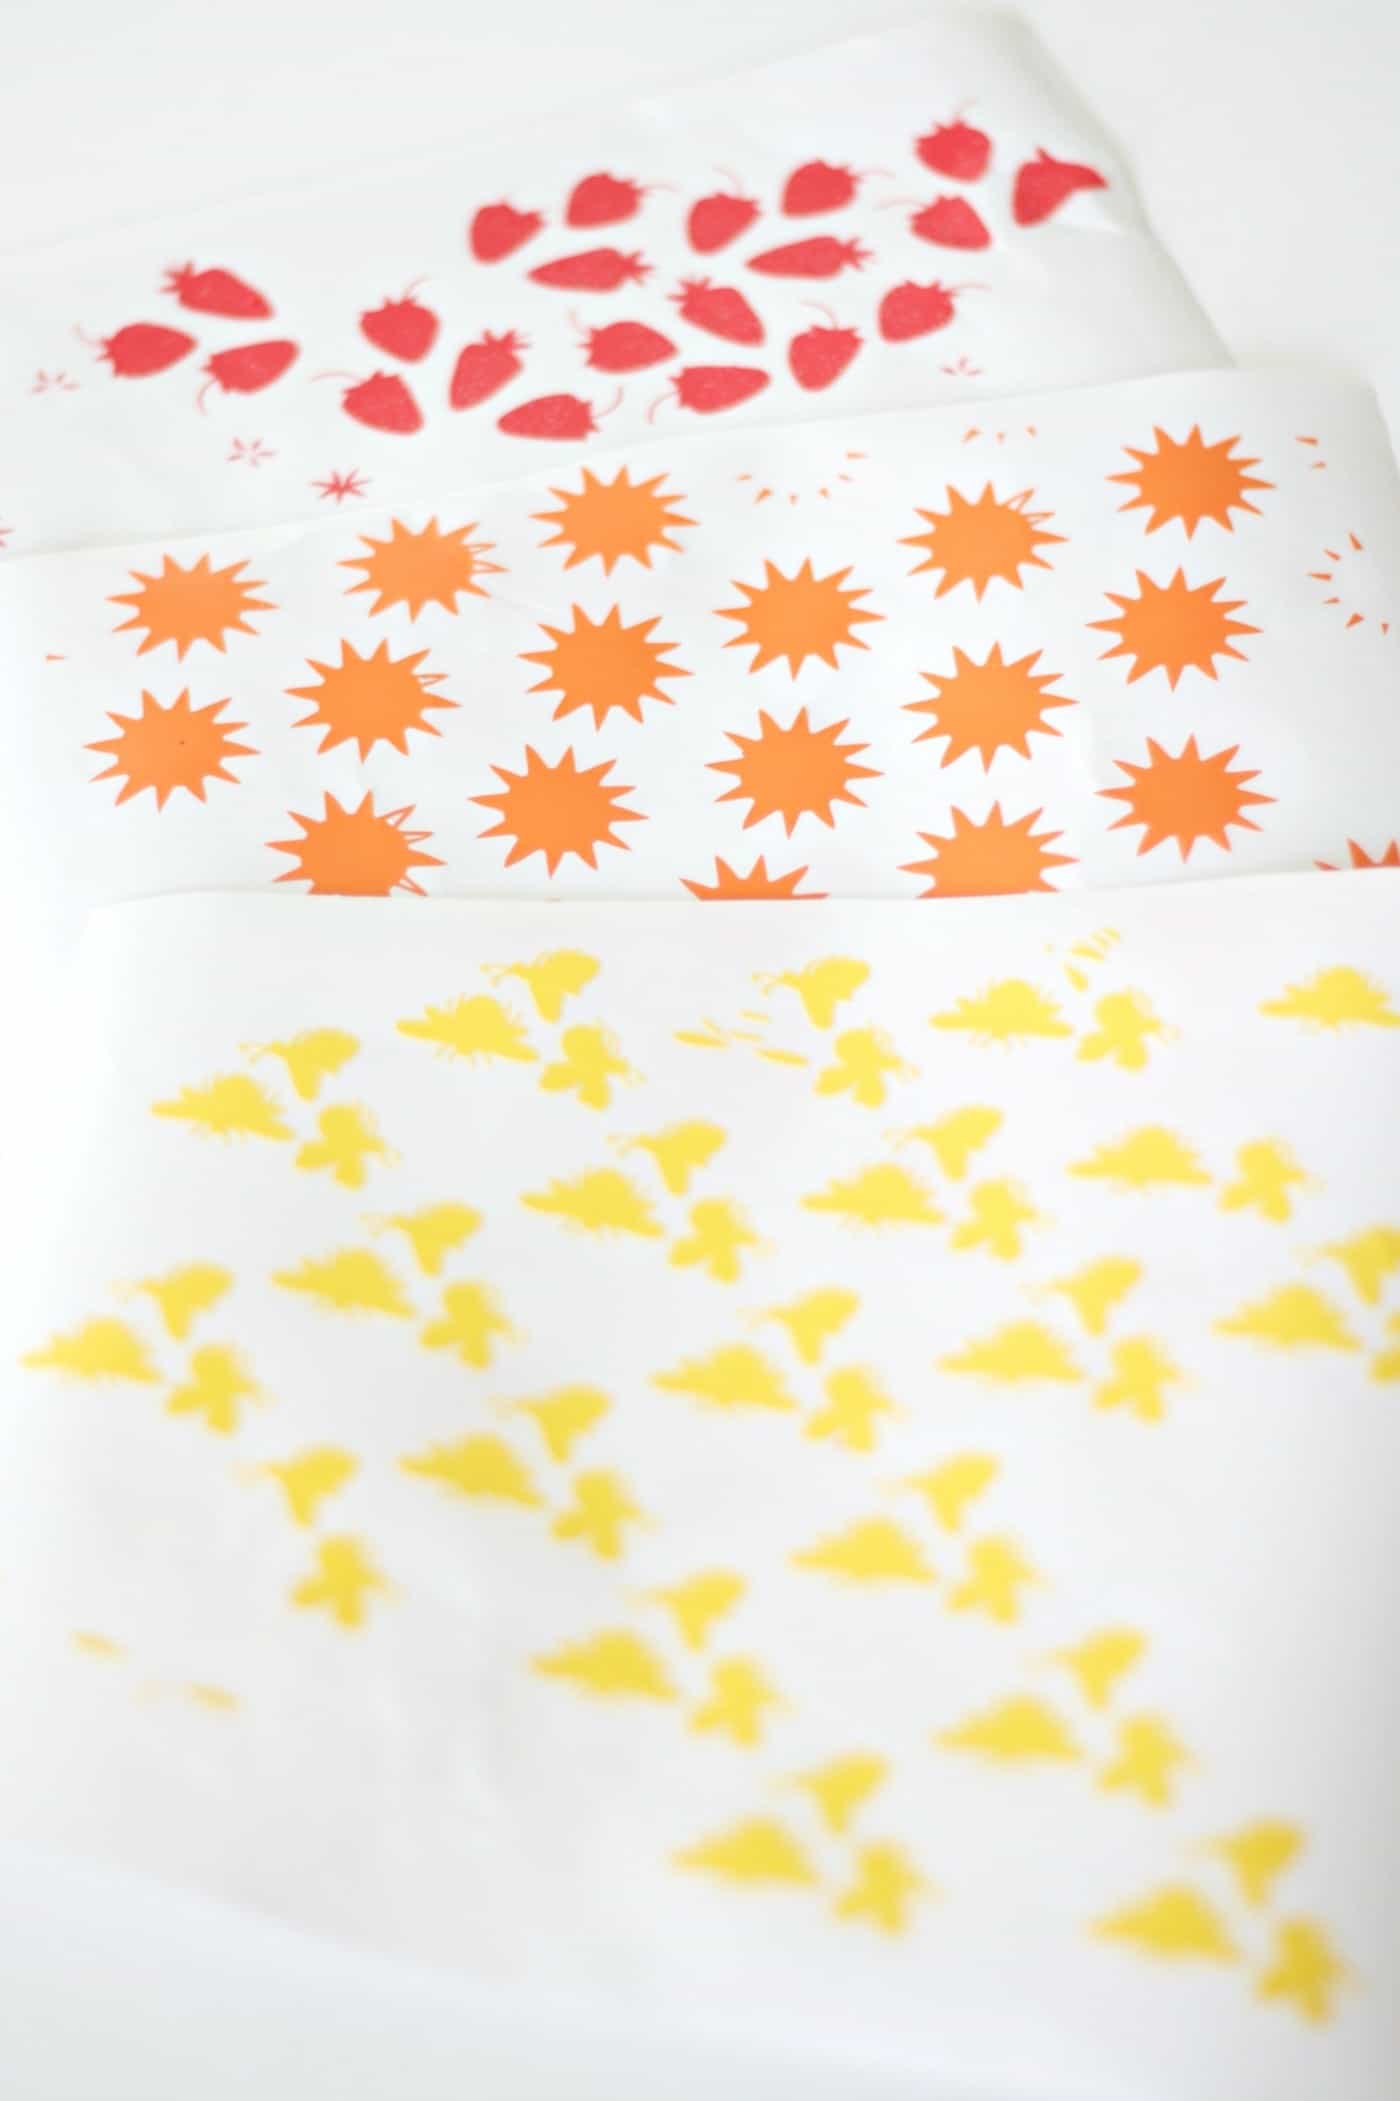 Red strawberry, orange sun, and yellow bee vinyl stickers